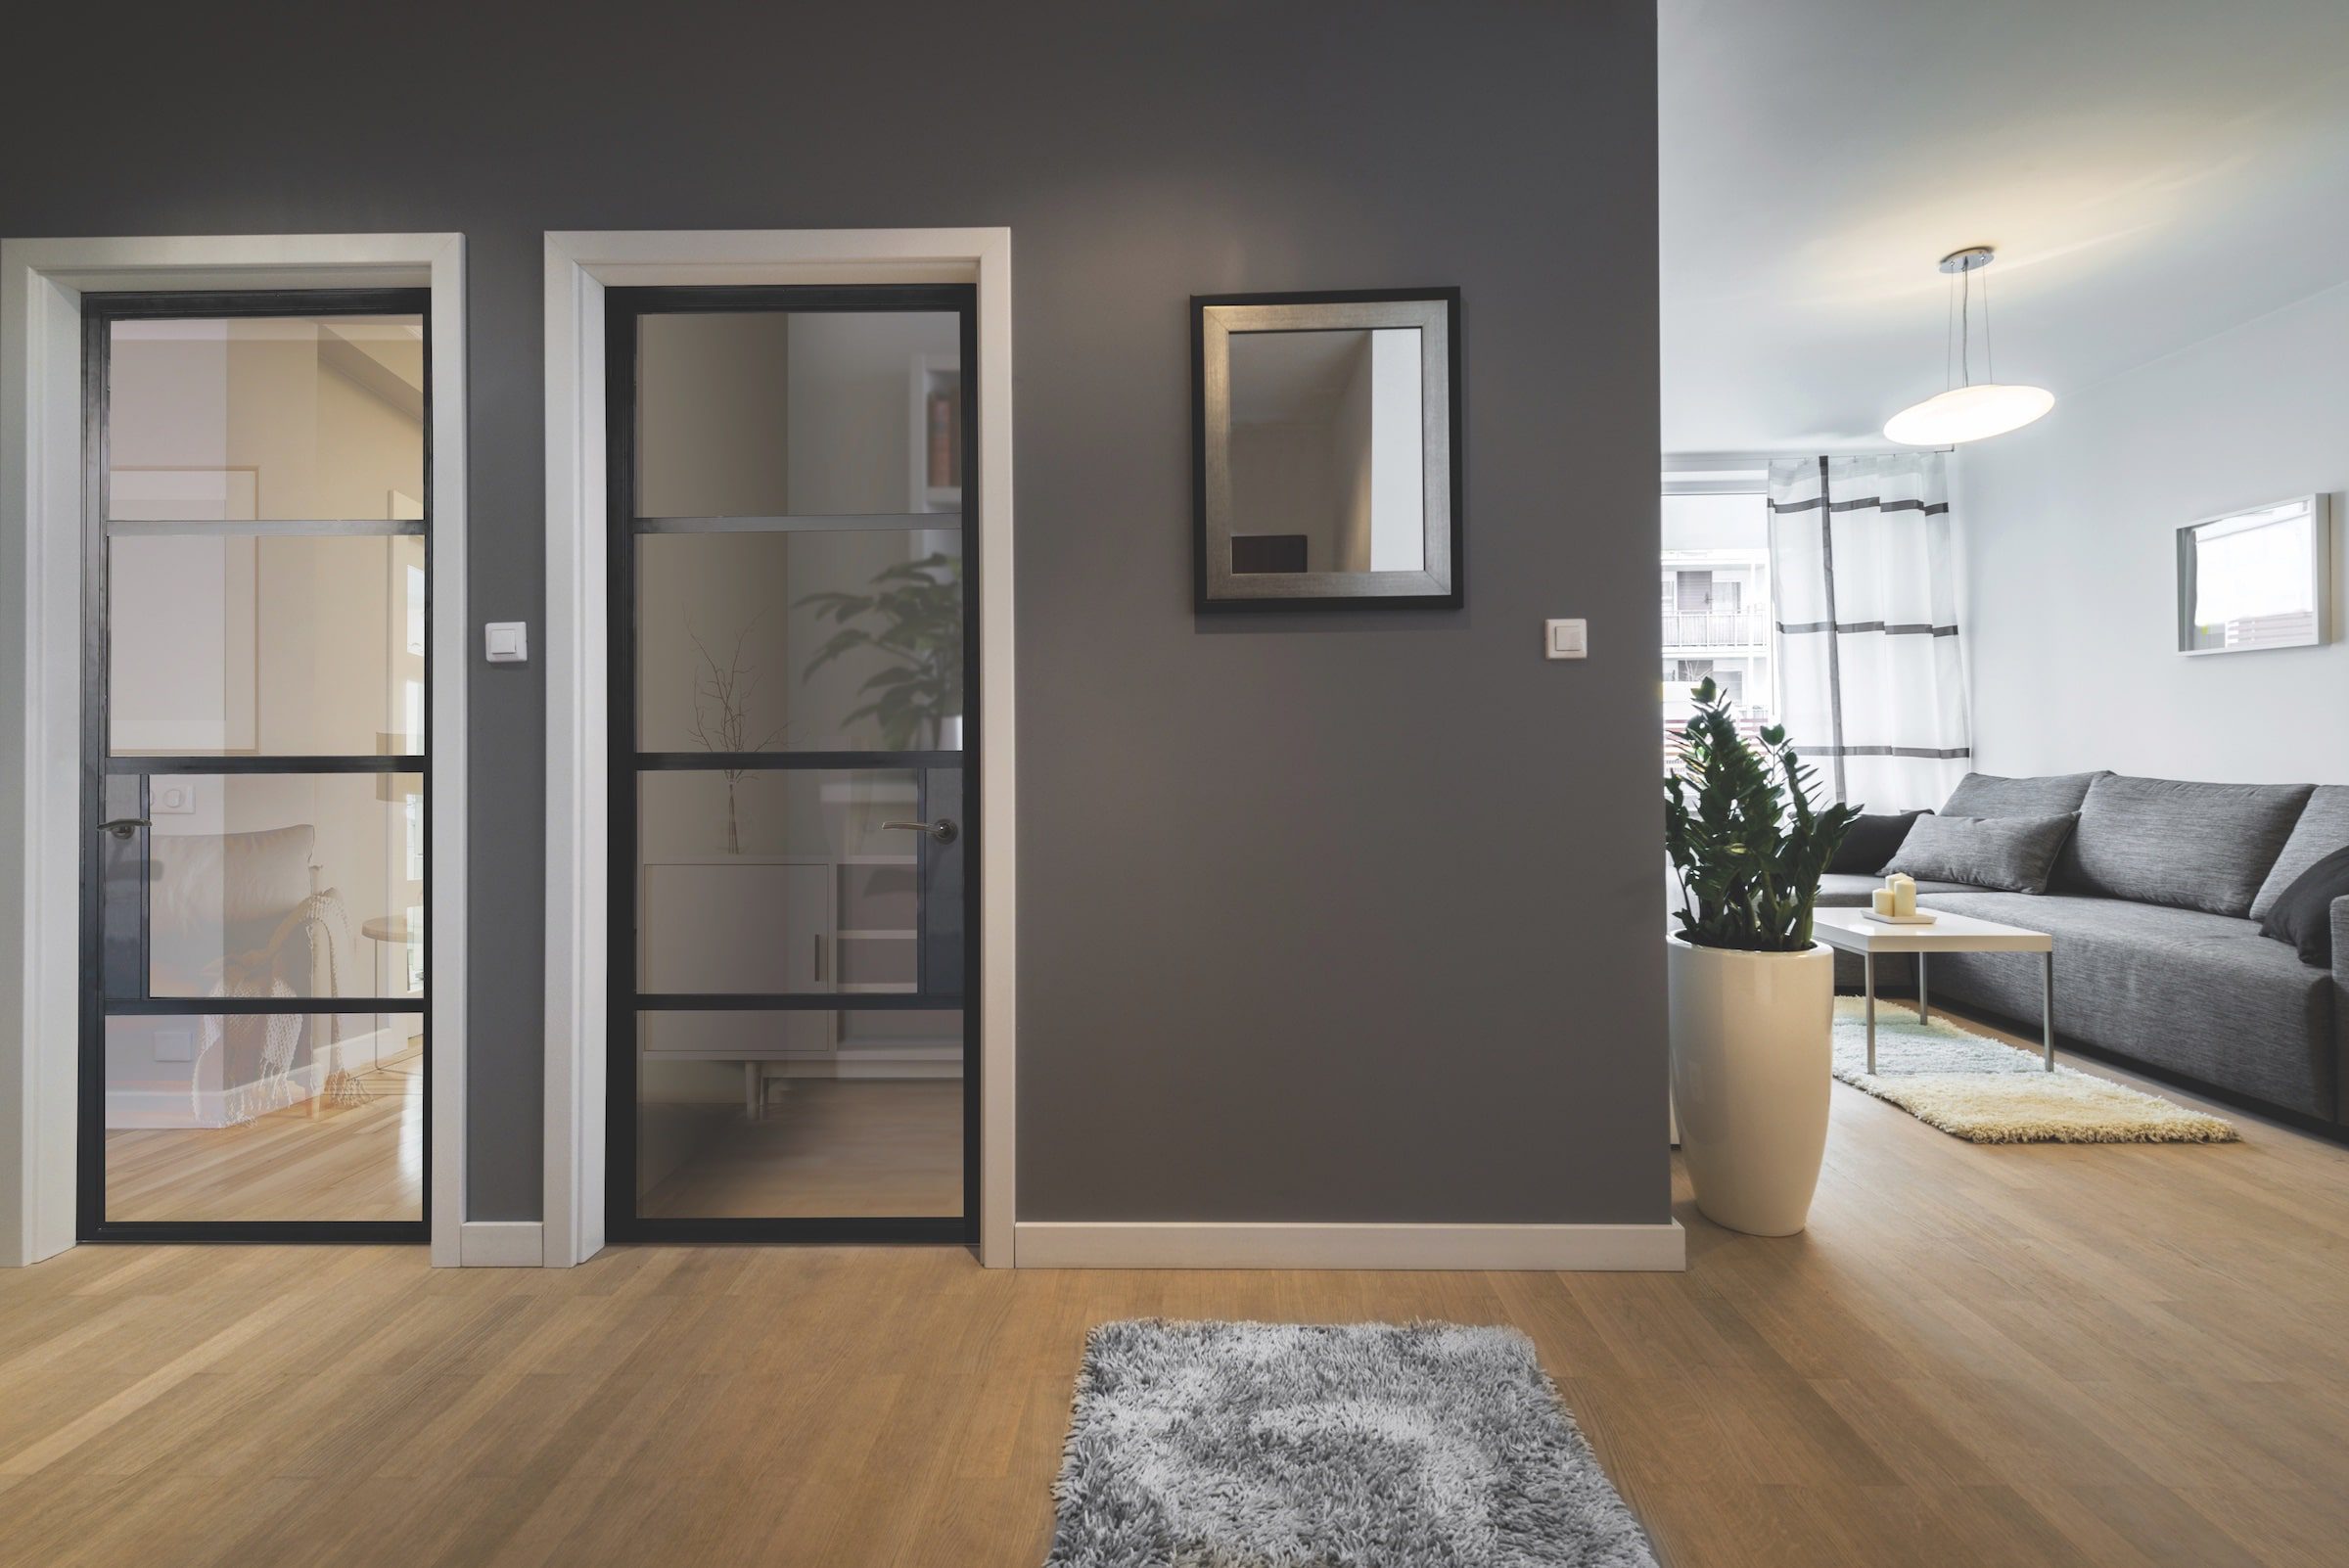 aluminium internal doors in the steel look in a modern house with wood floors